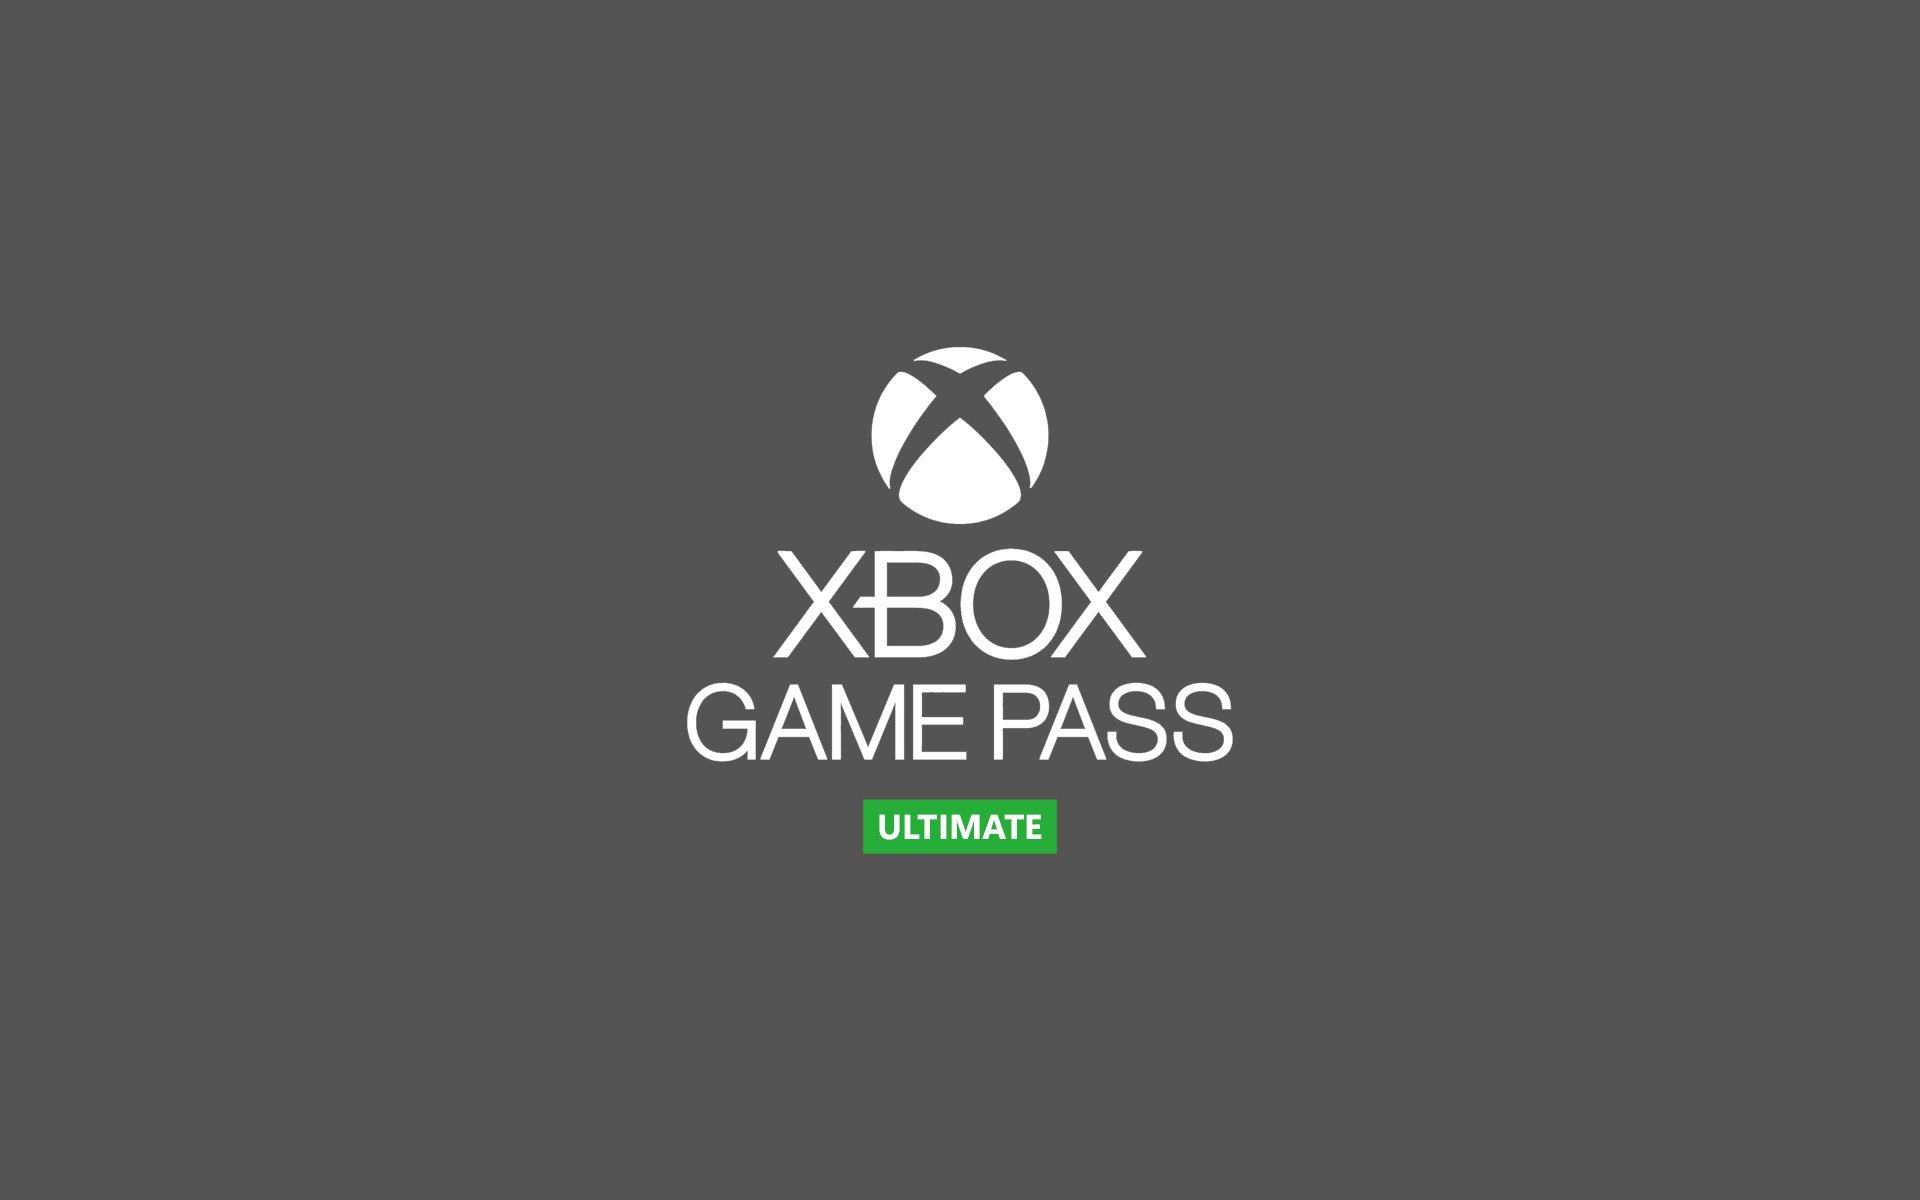 Tela do Xbox Game Pass - Promocional